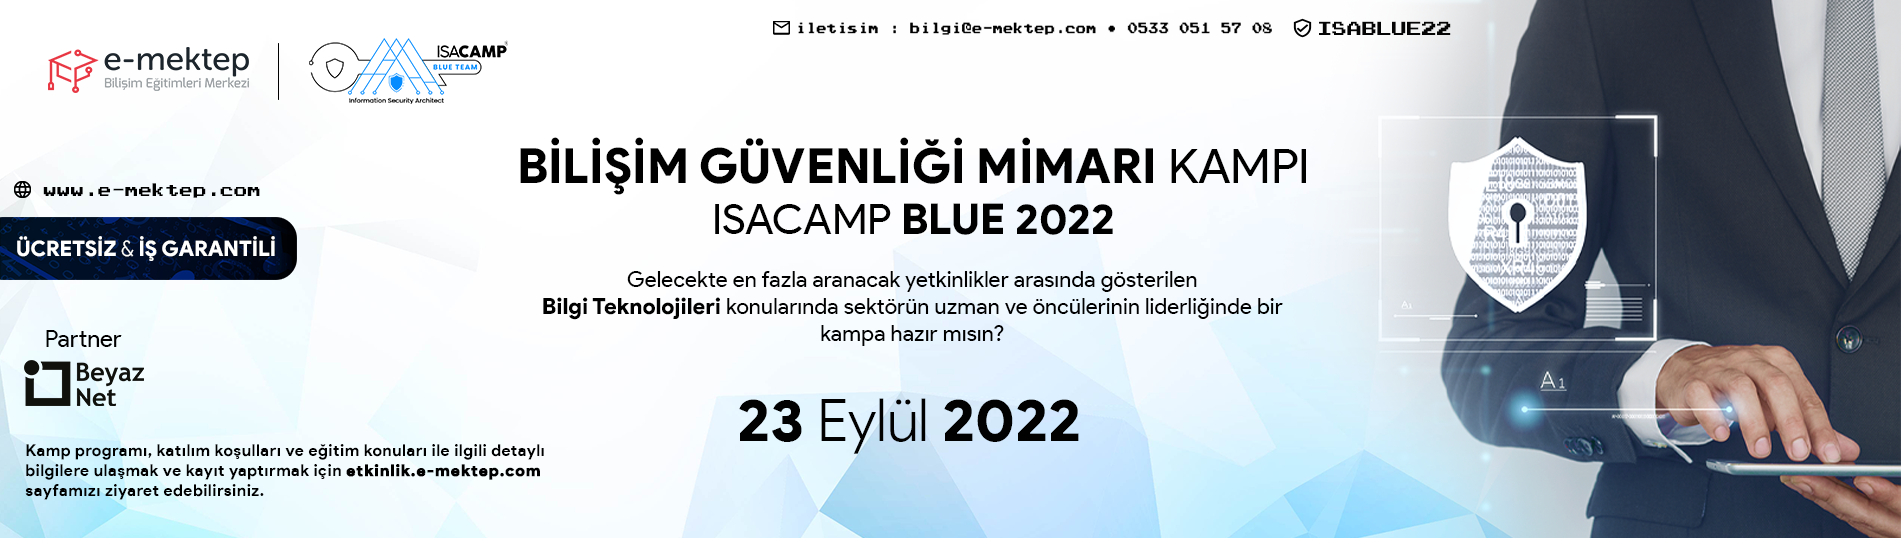 ISACAMP-BLUE 2022-2